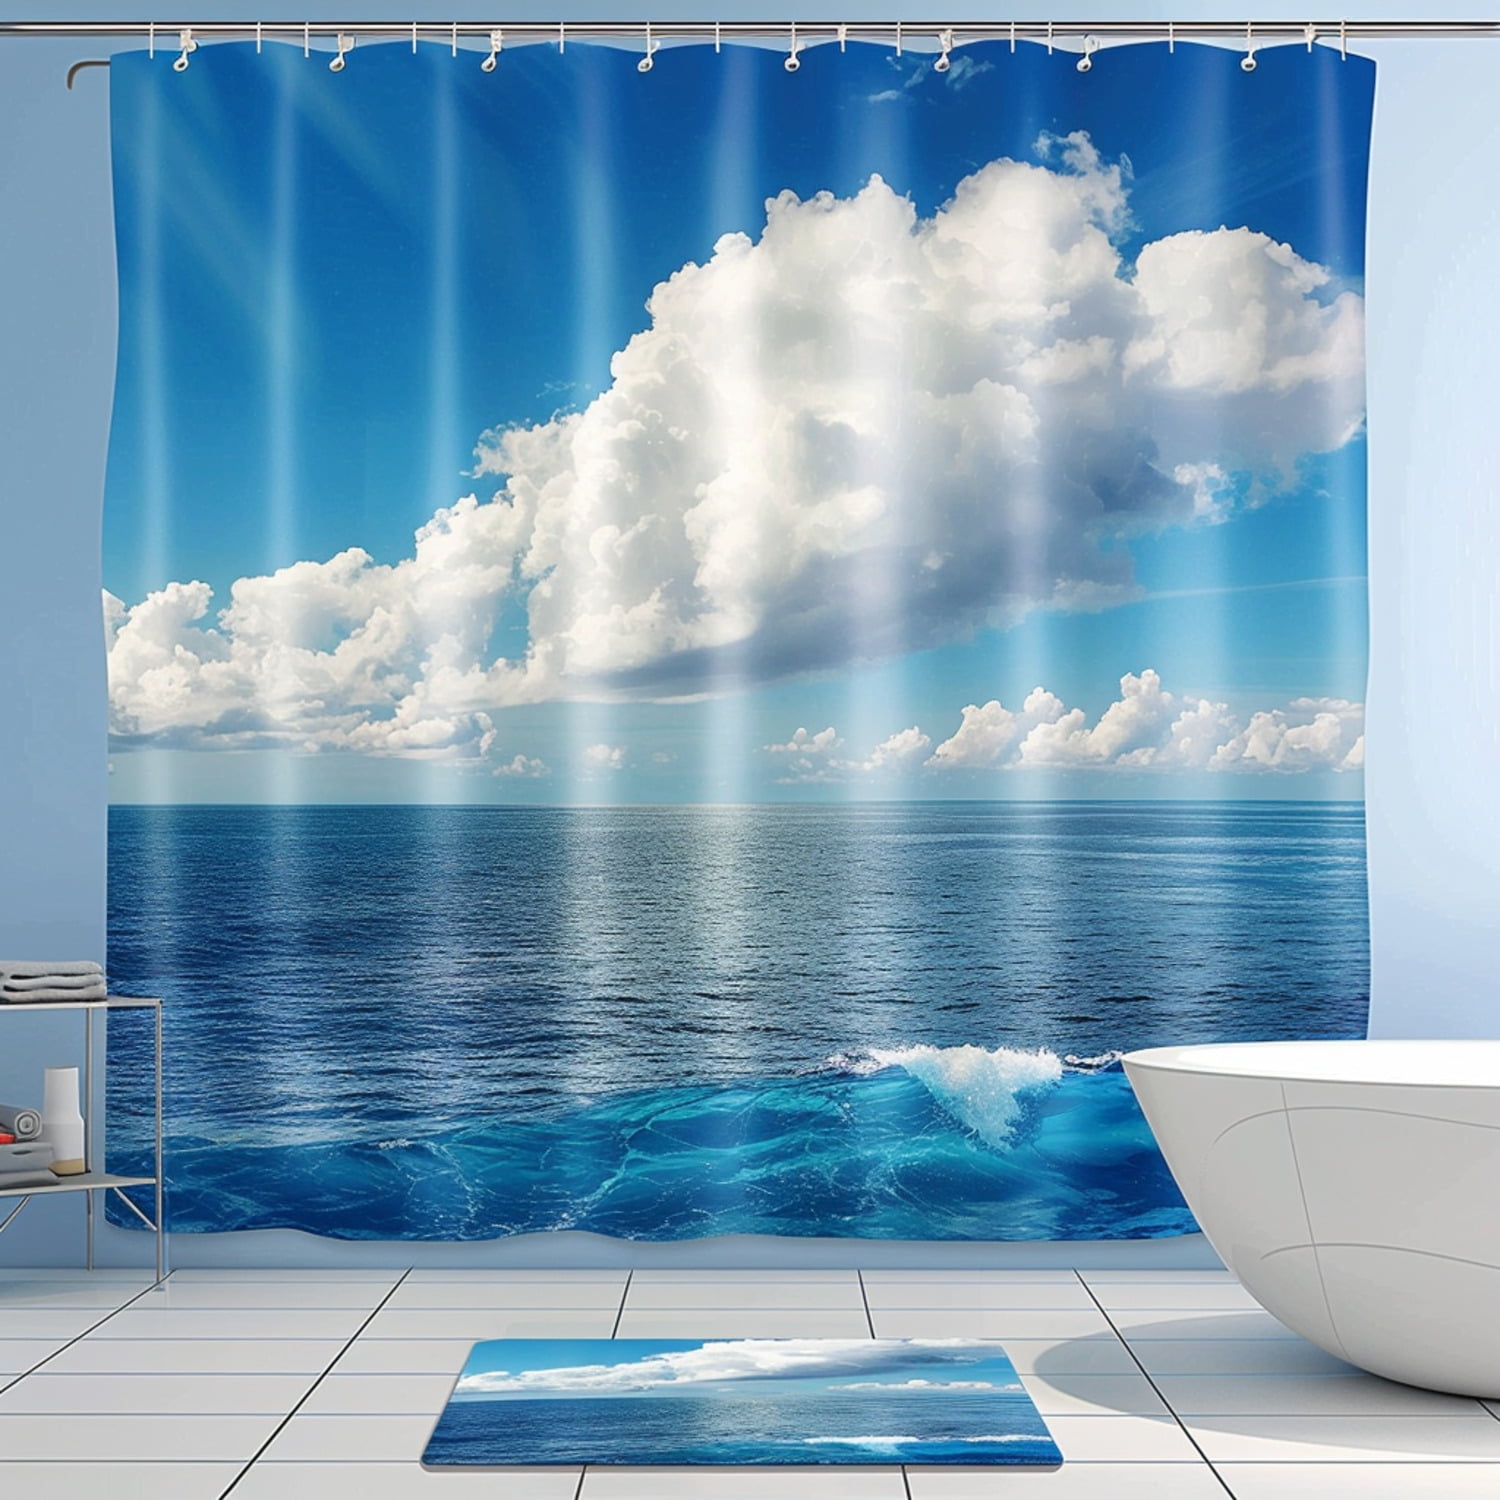 Blue Ocean Shower Curtain Set with White Clouds Bathroom Decor ...